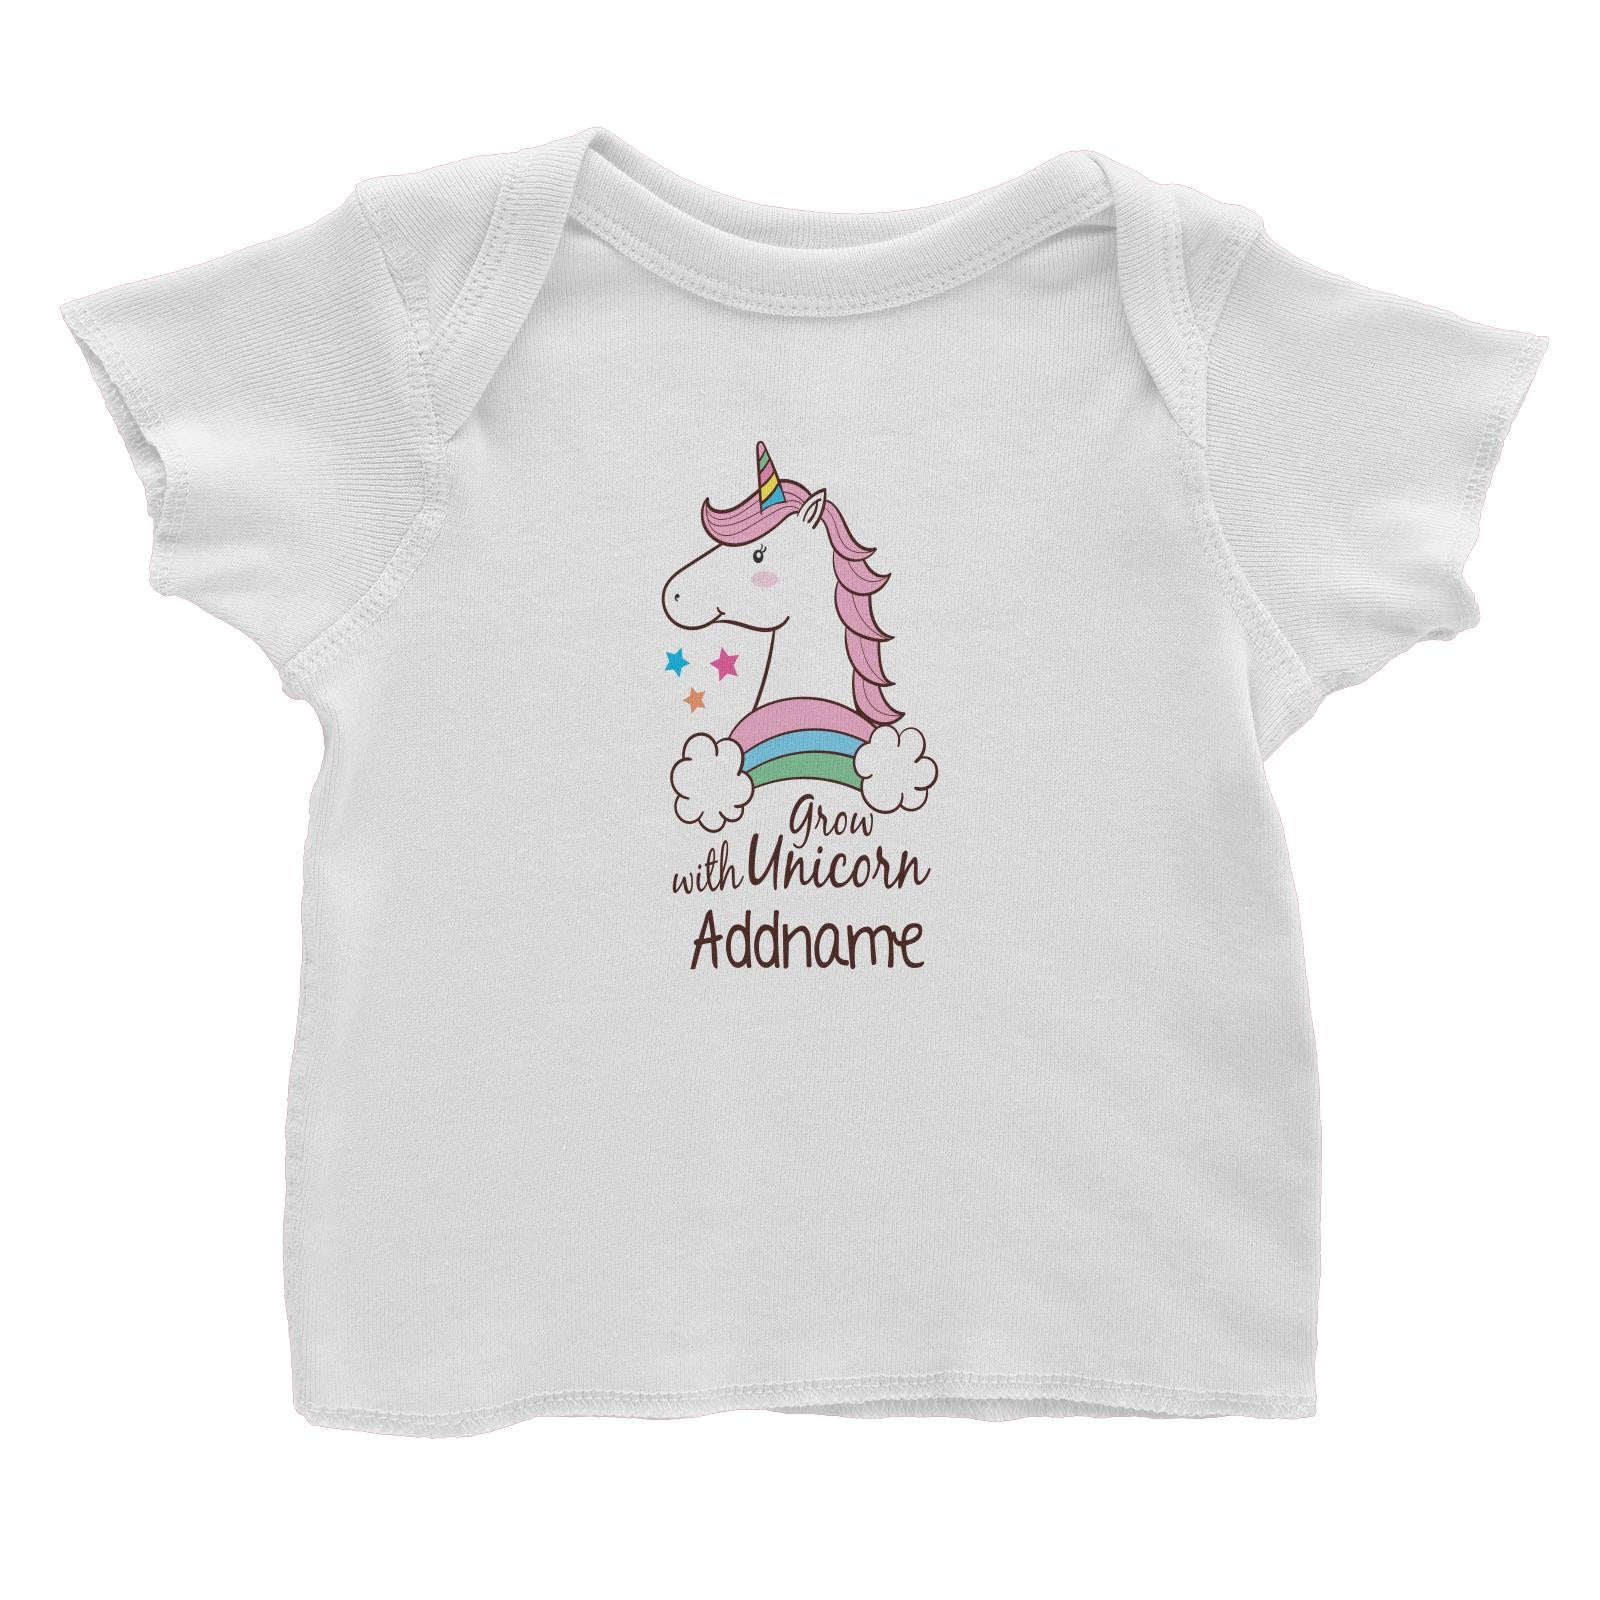 Cool Cute Unicorn Grow With Unicorn Addname Baby T-Shirt